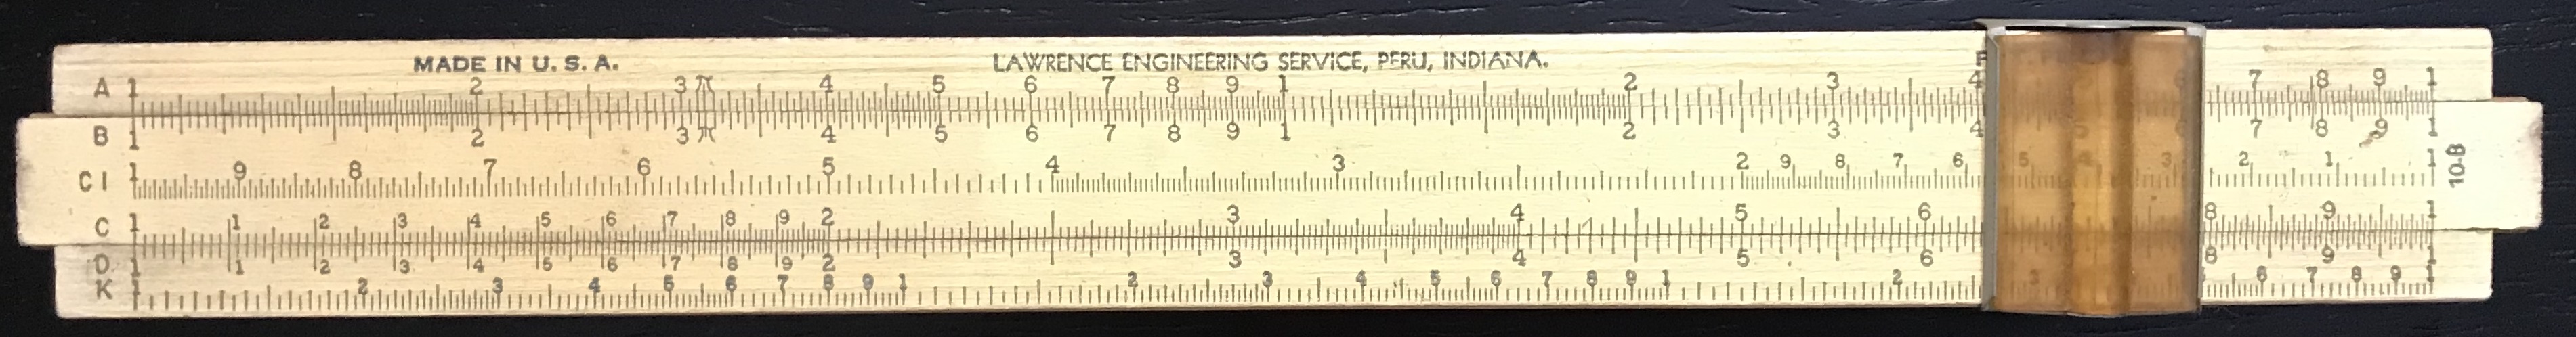 Lawrence Engineering Service, Peru, Indiana, 10-B.